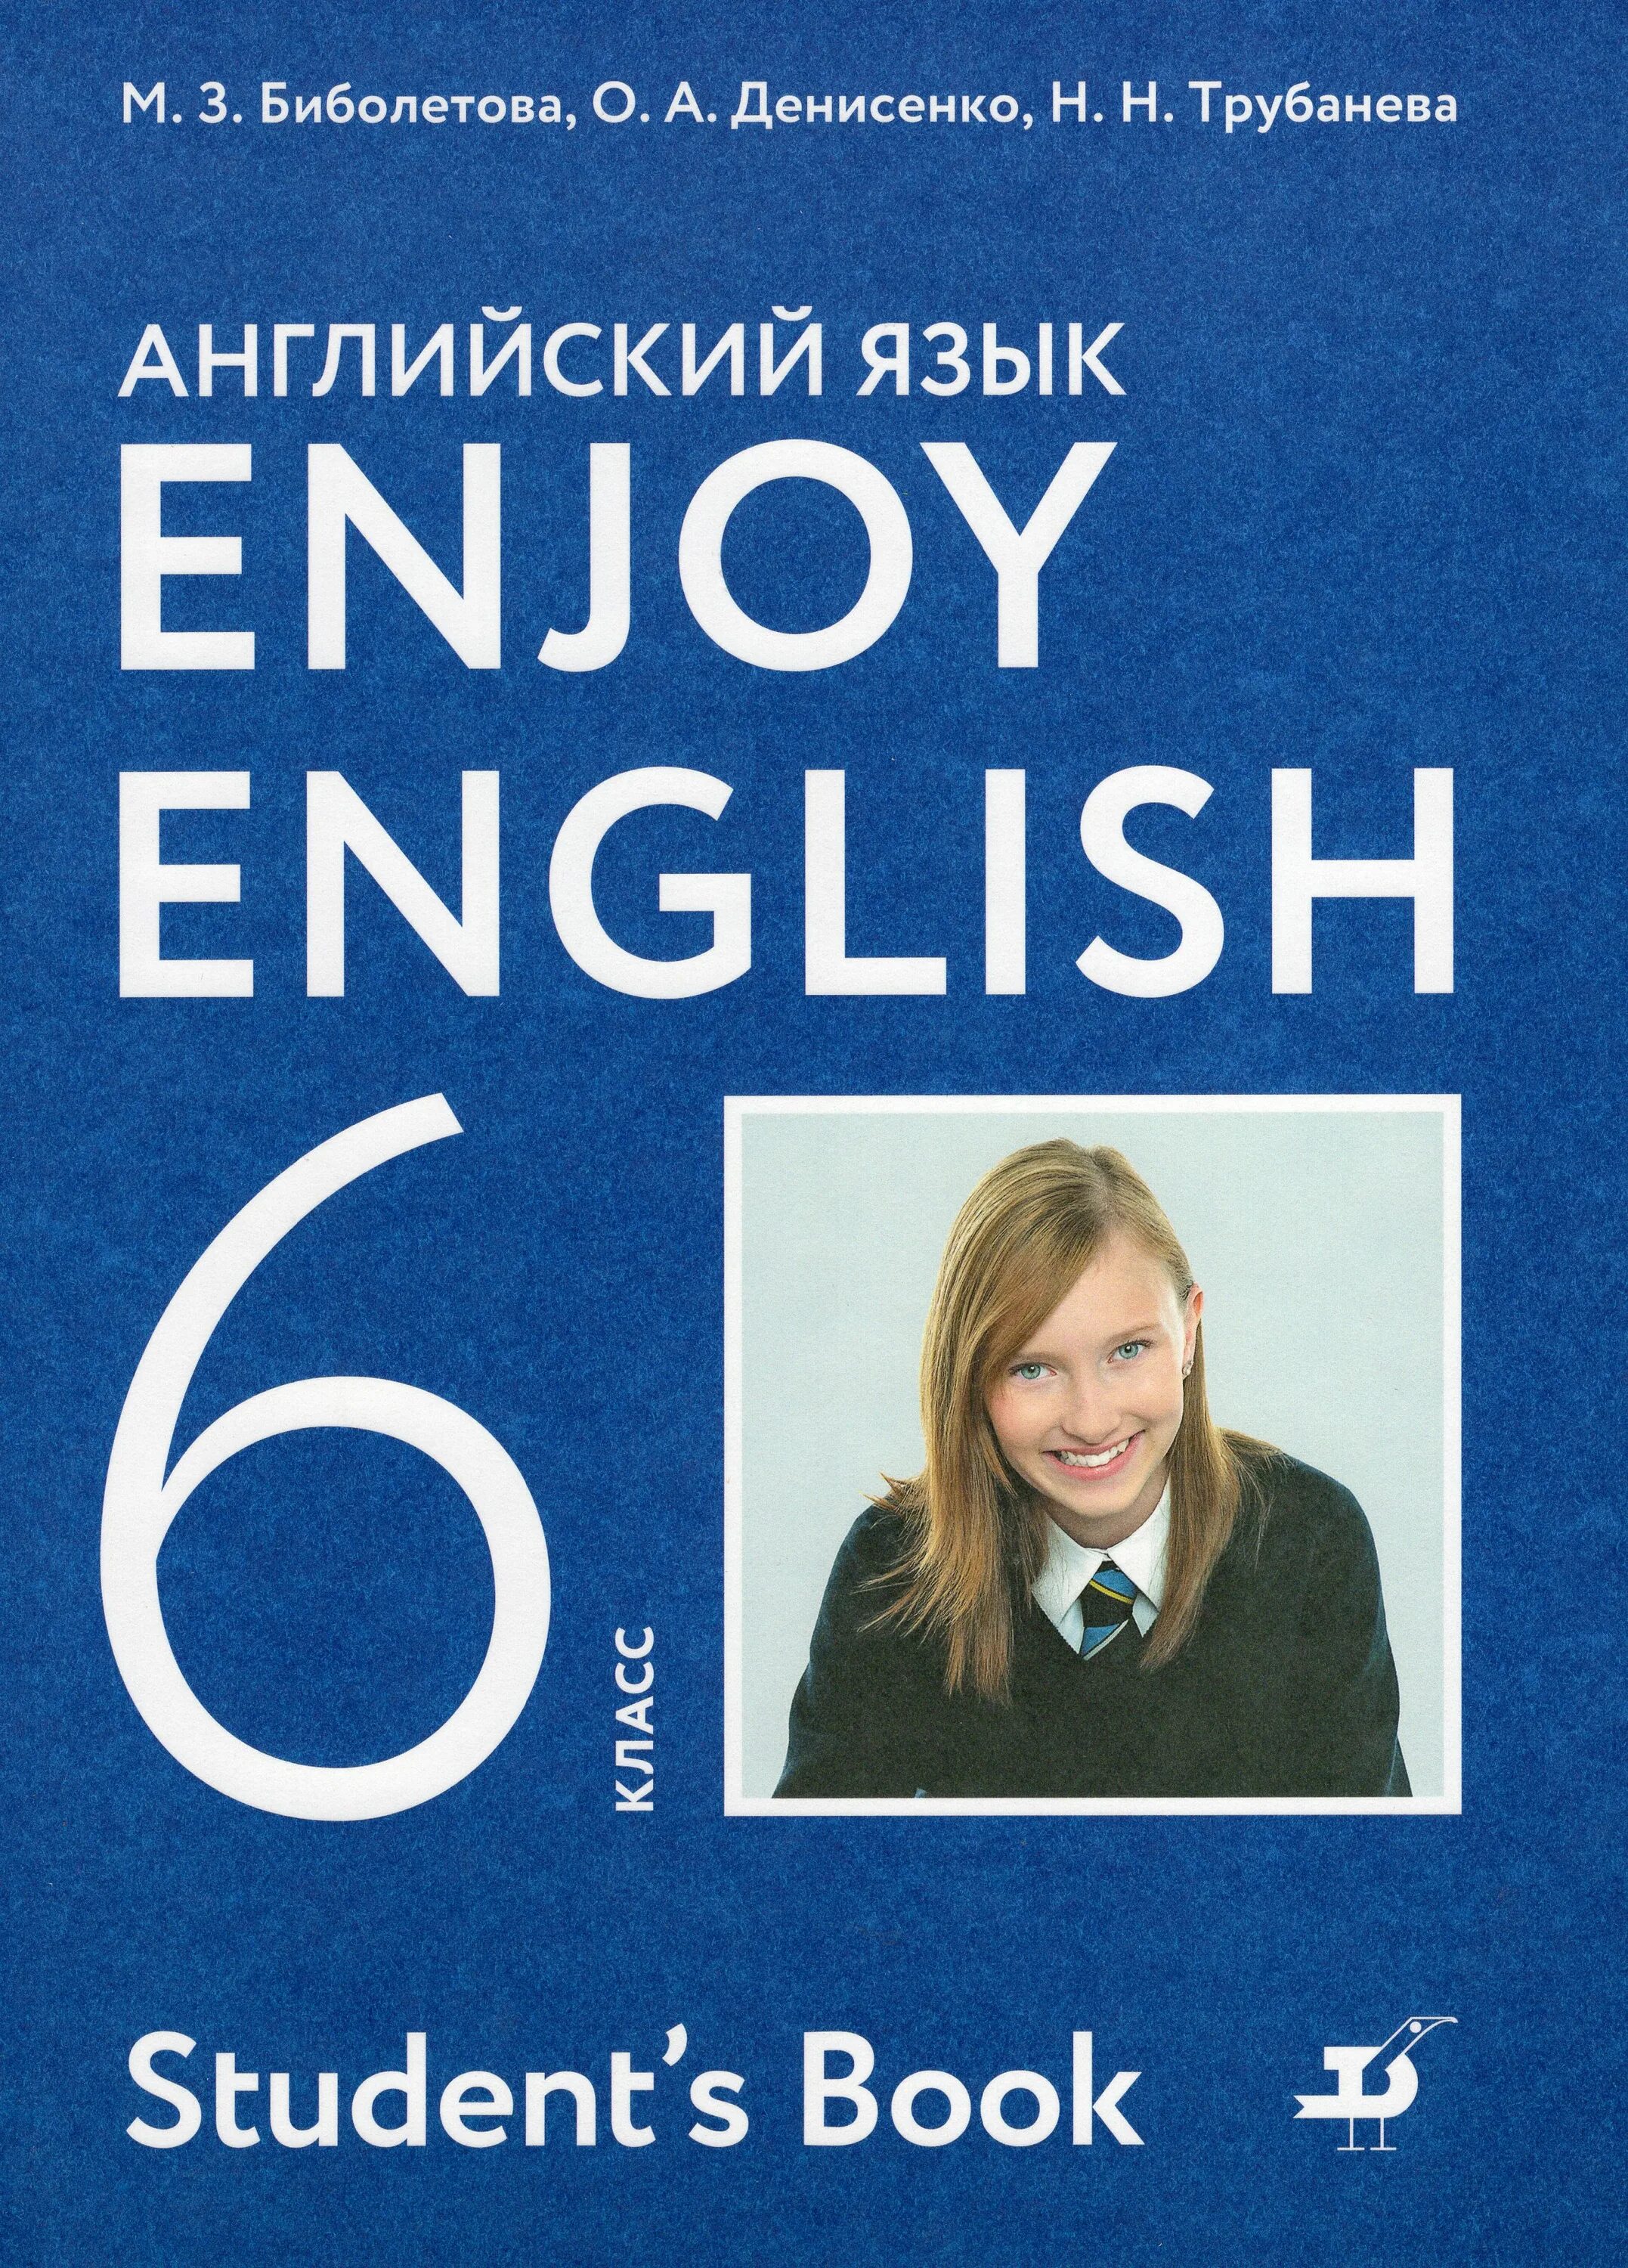 Английский язык 6 класс энджой инглиш